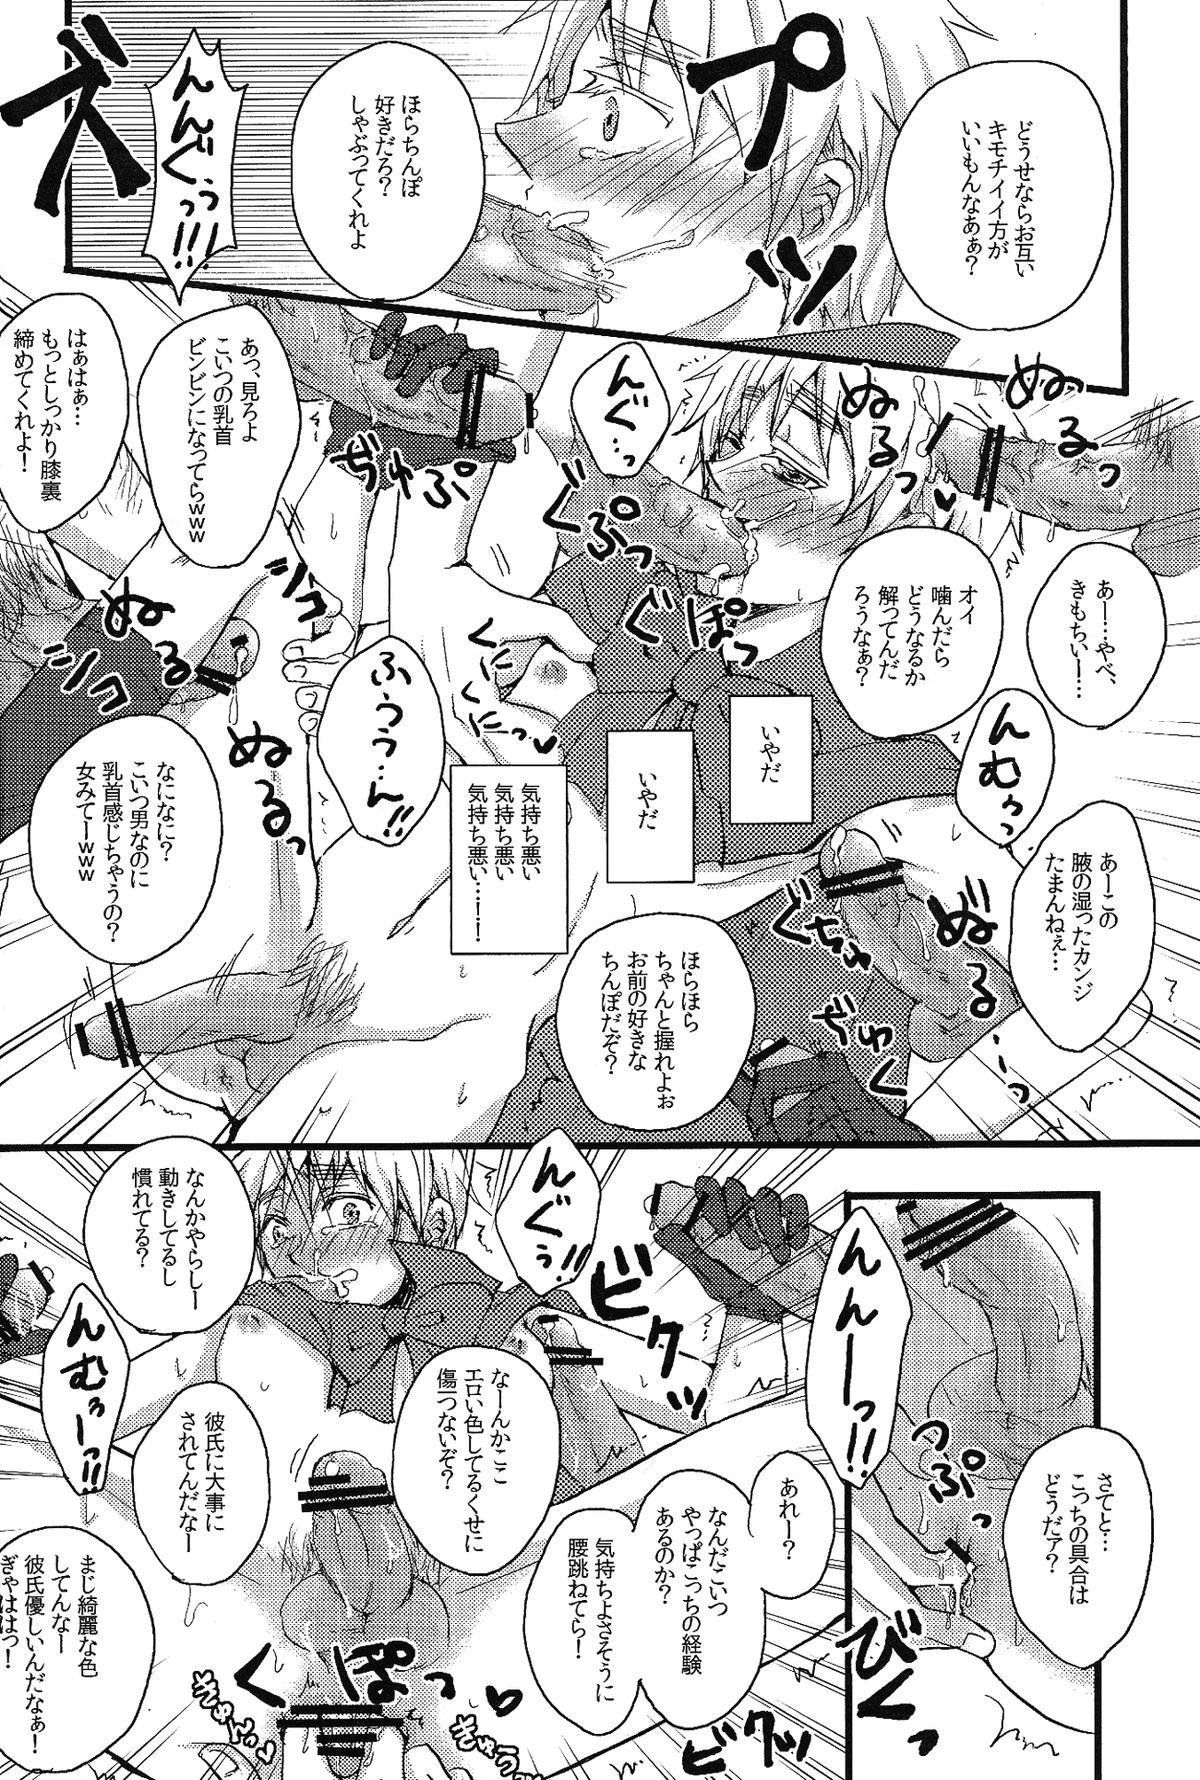 Loira MAGICAL☆HEALING - Axis powers hetalia Sex Party - Page 9